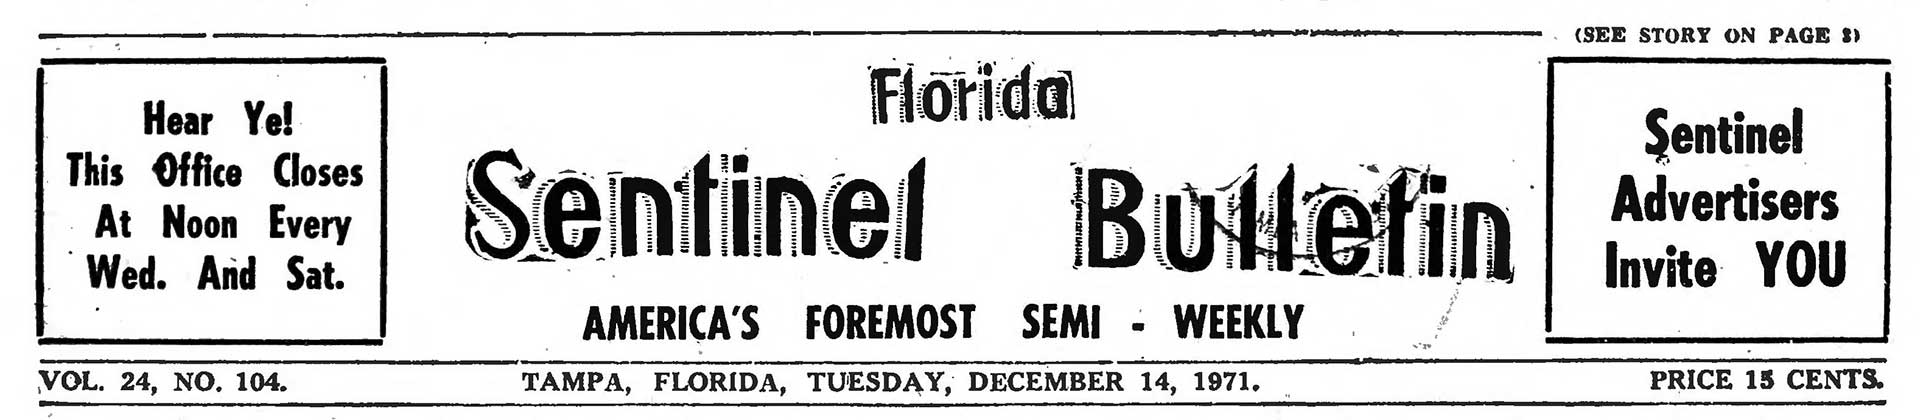 Florida Sentinel Bulletin Collection